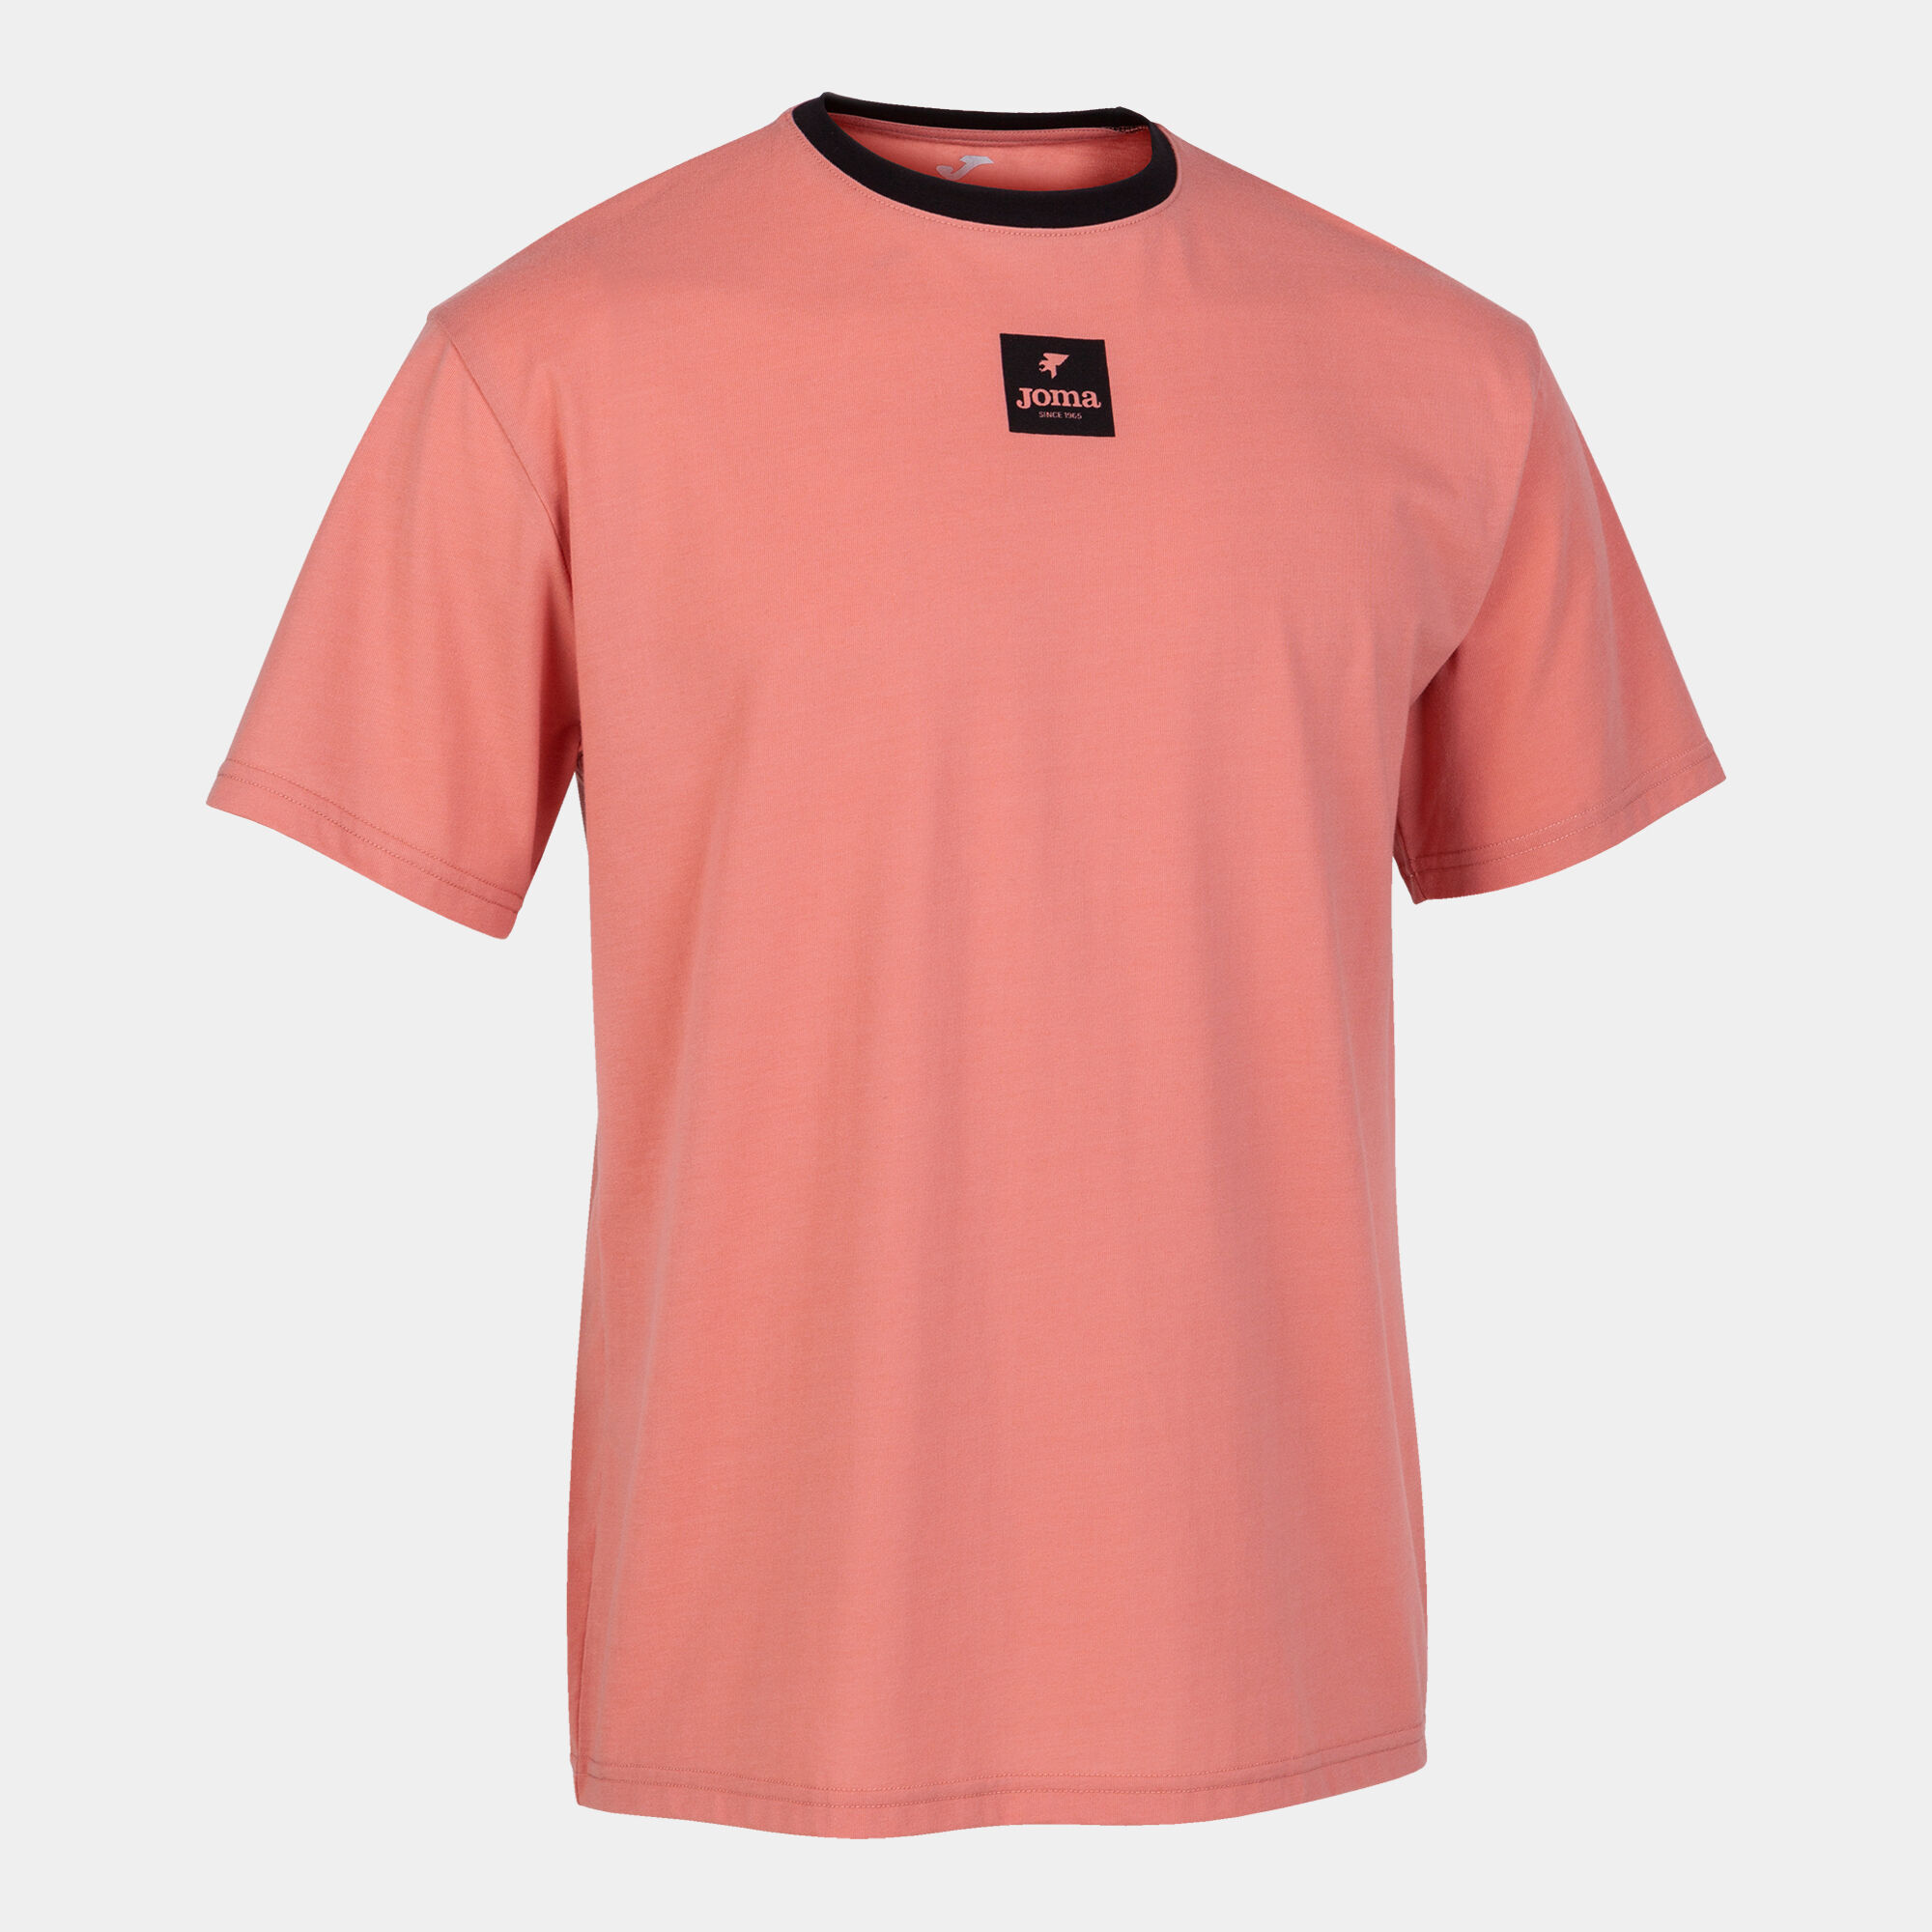 Camiseta manga corta hombre California rosa